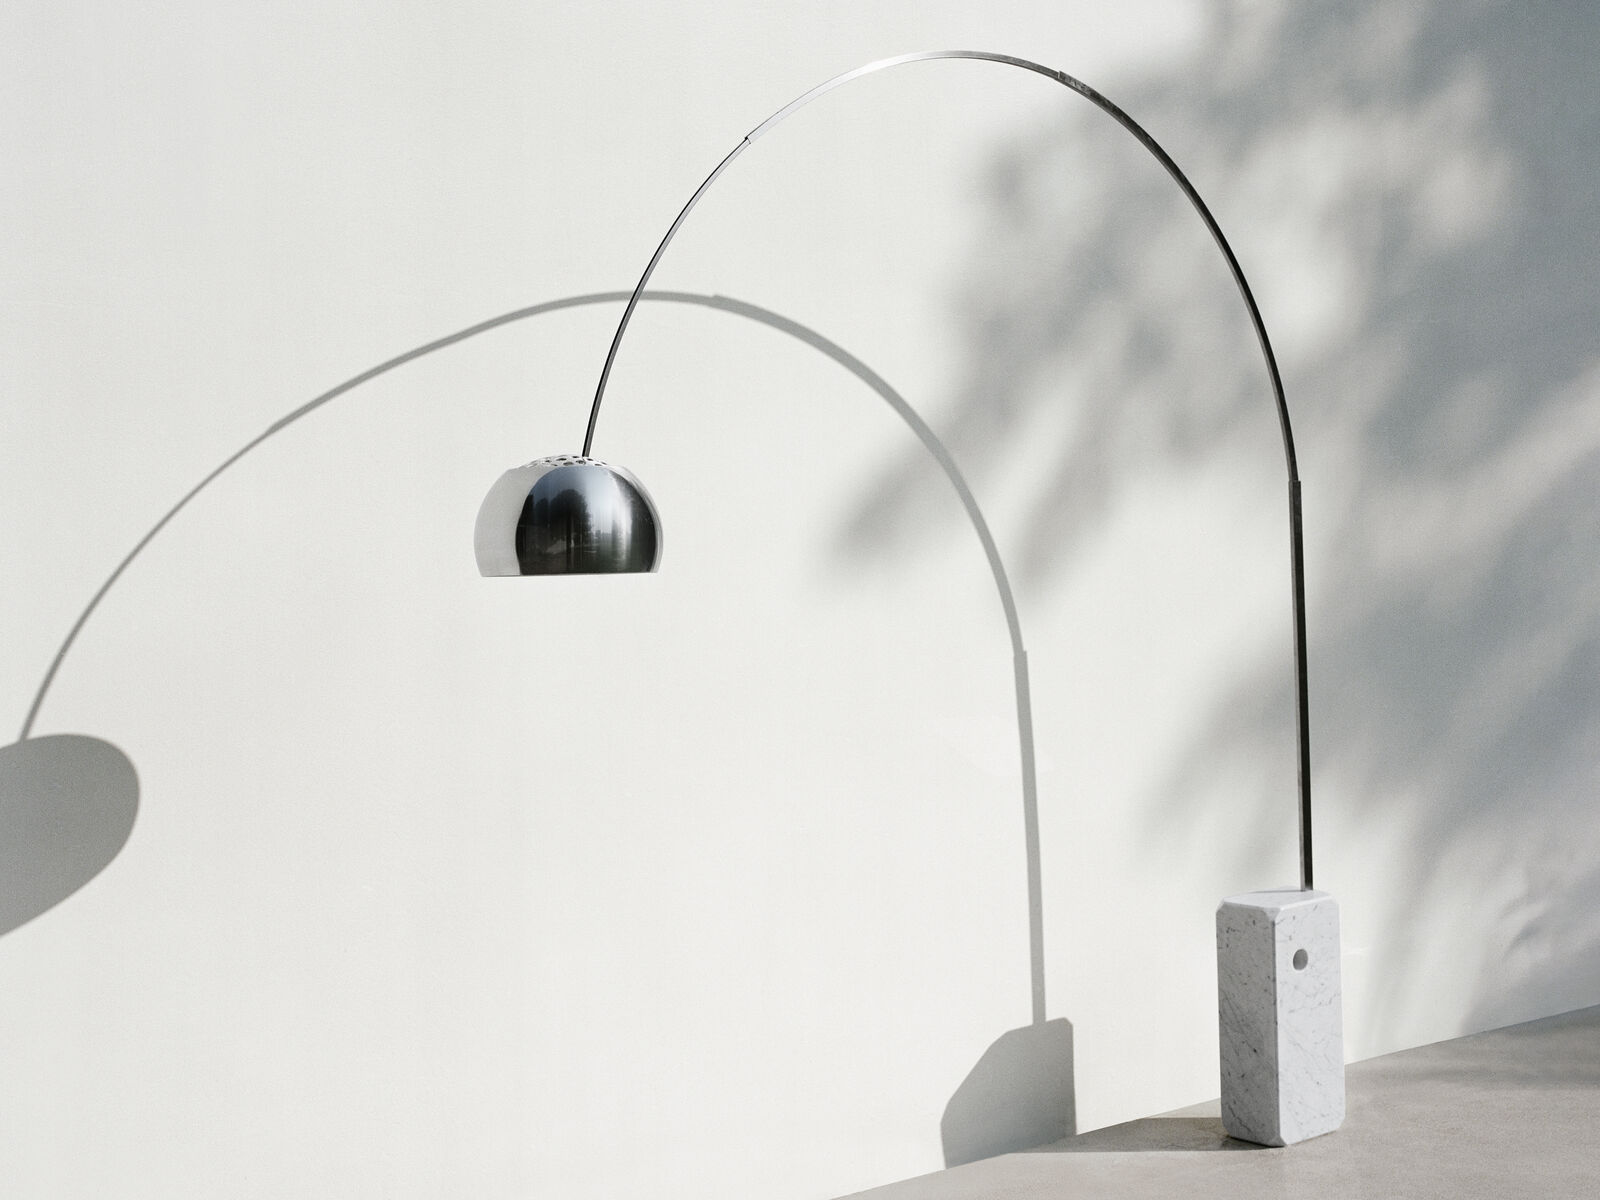 Arco light design by Achille and Pier Giacomo Castiglioni, Flos